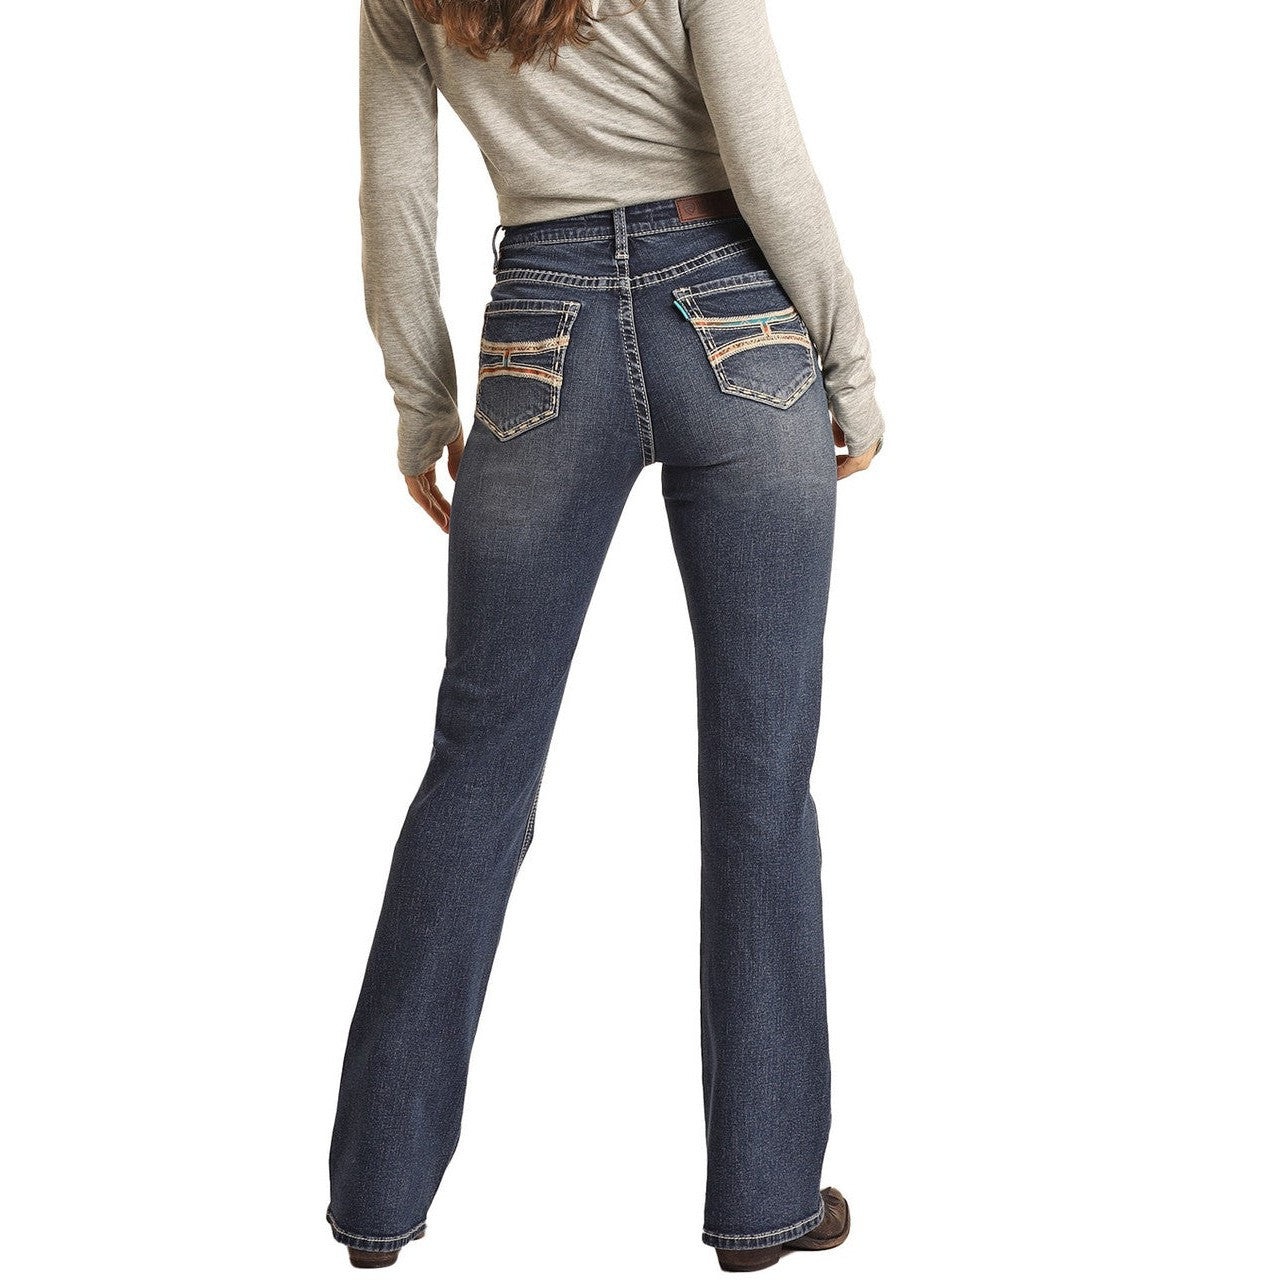 Hooey Women's Mid Rise Stretch Bootcut Jeans - Medium Vintage